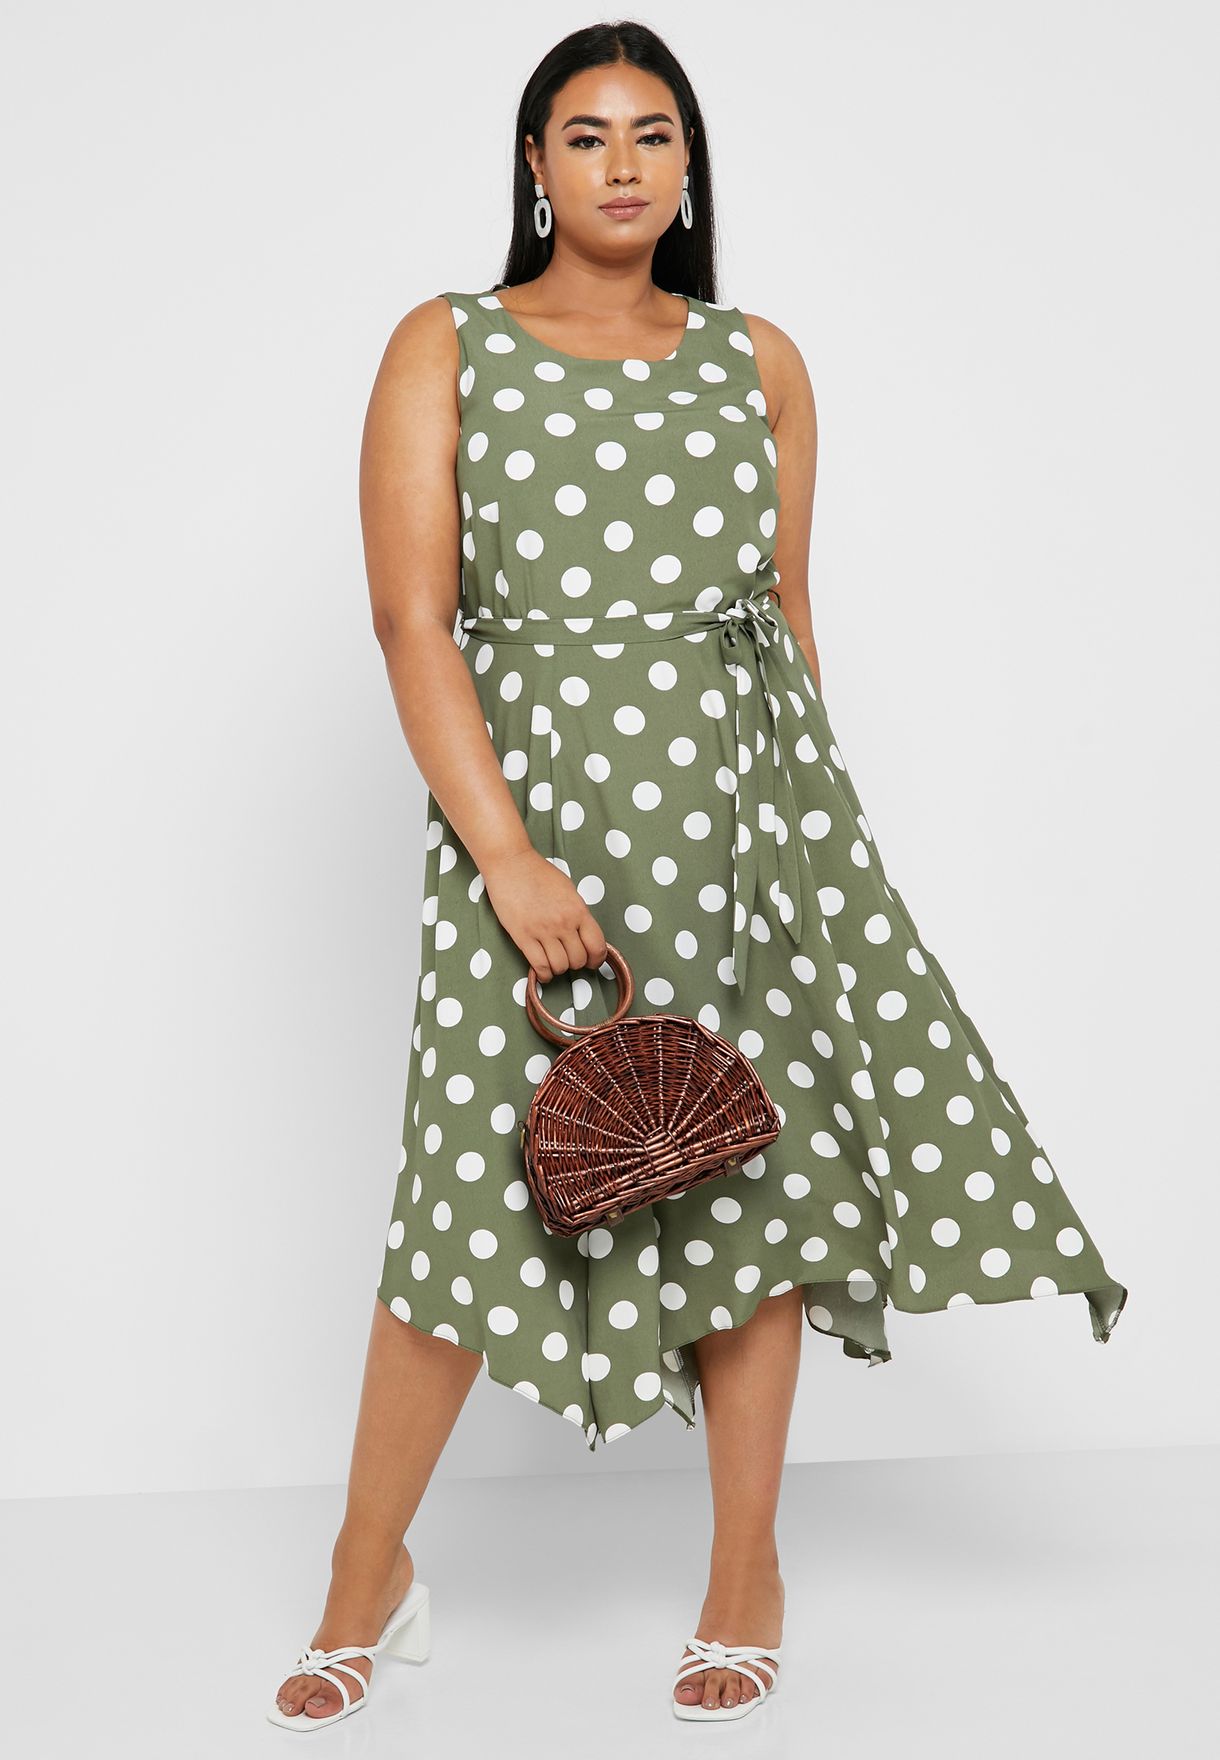 Buy Evans prints Polka Dot Dress for 